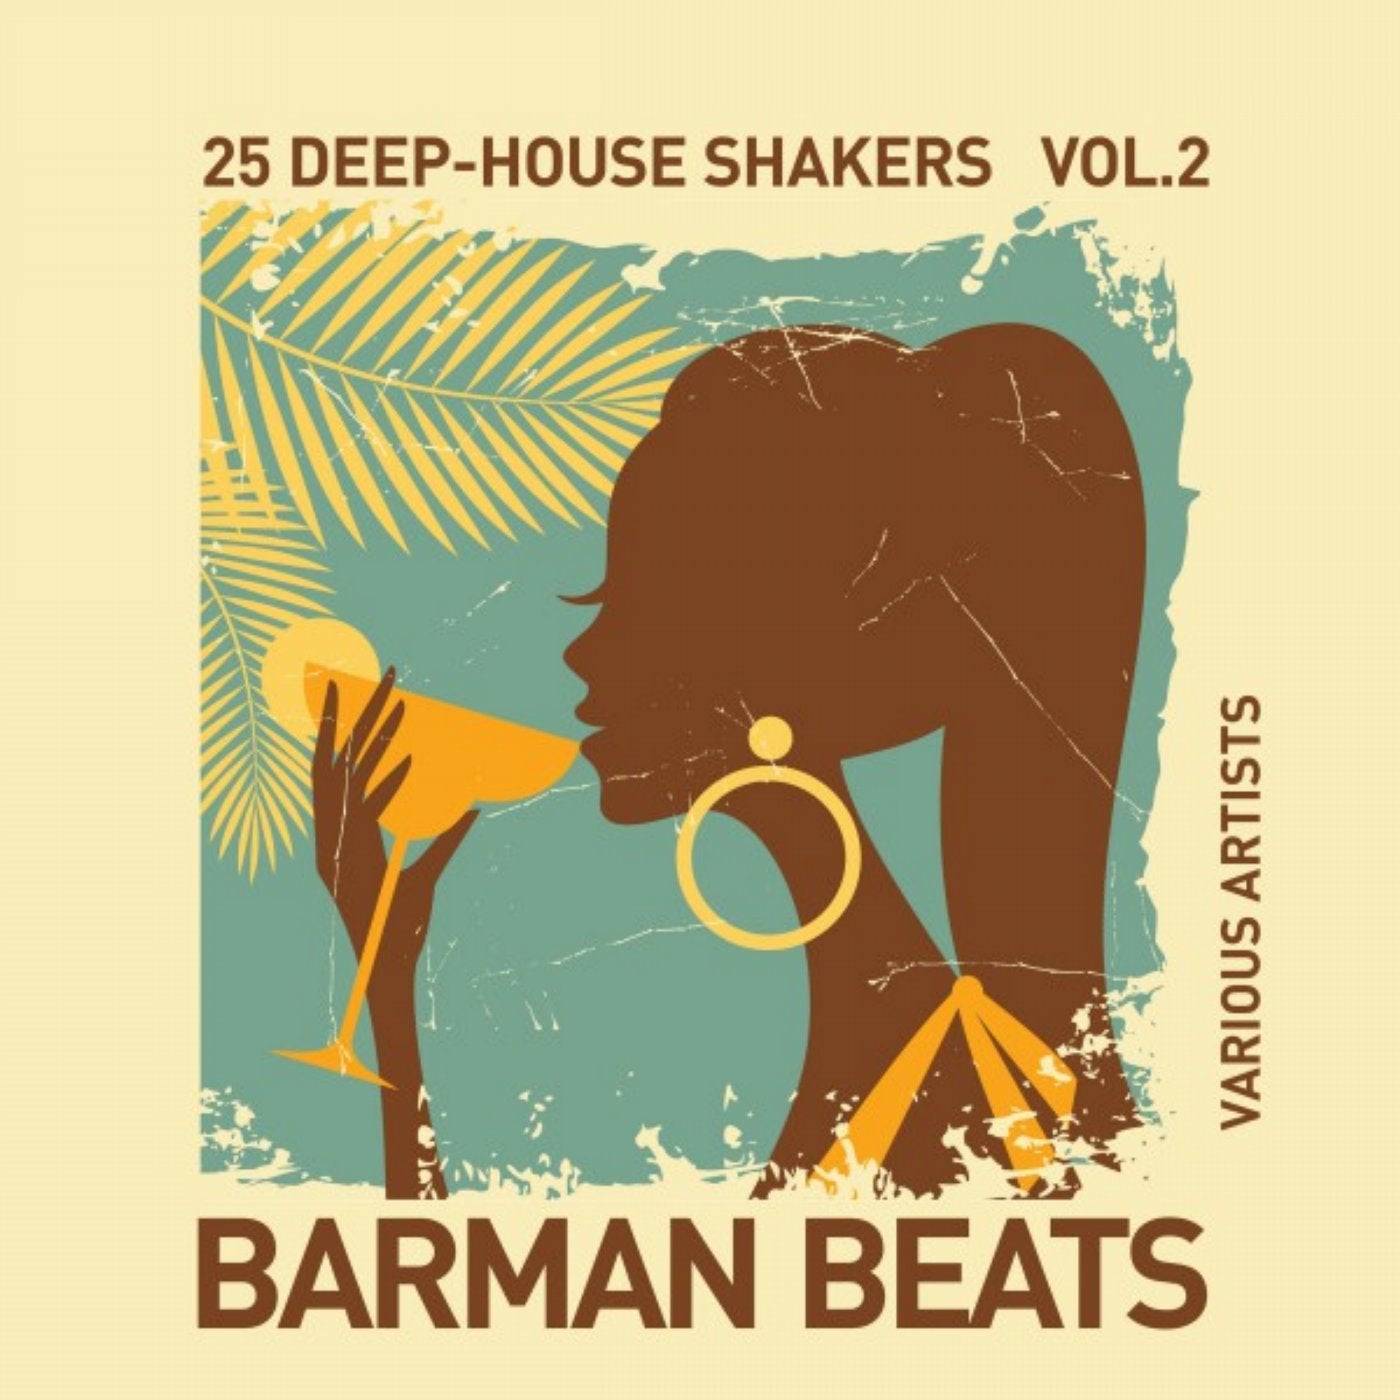 Barman Beats (25 Deep-House Shakers), Vol. 2